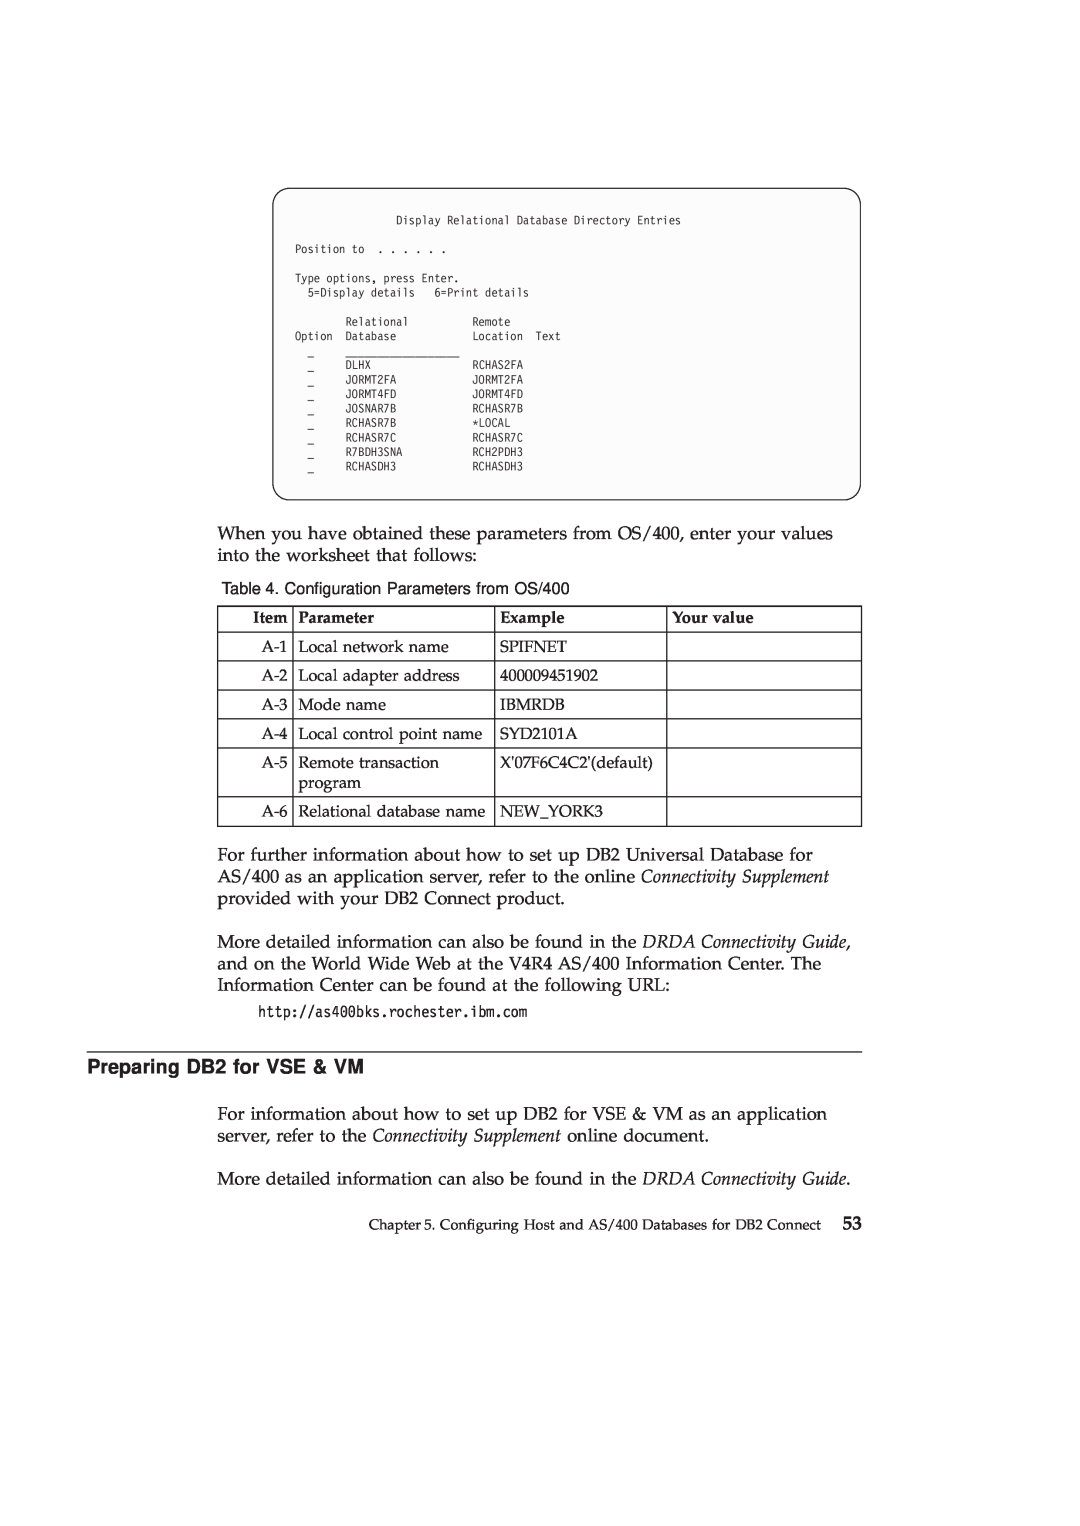 IBM GC09-2830-00 manual Preparing DB2 for VSE & VM, Parameter, Example, Your value 